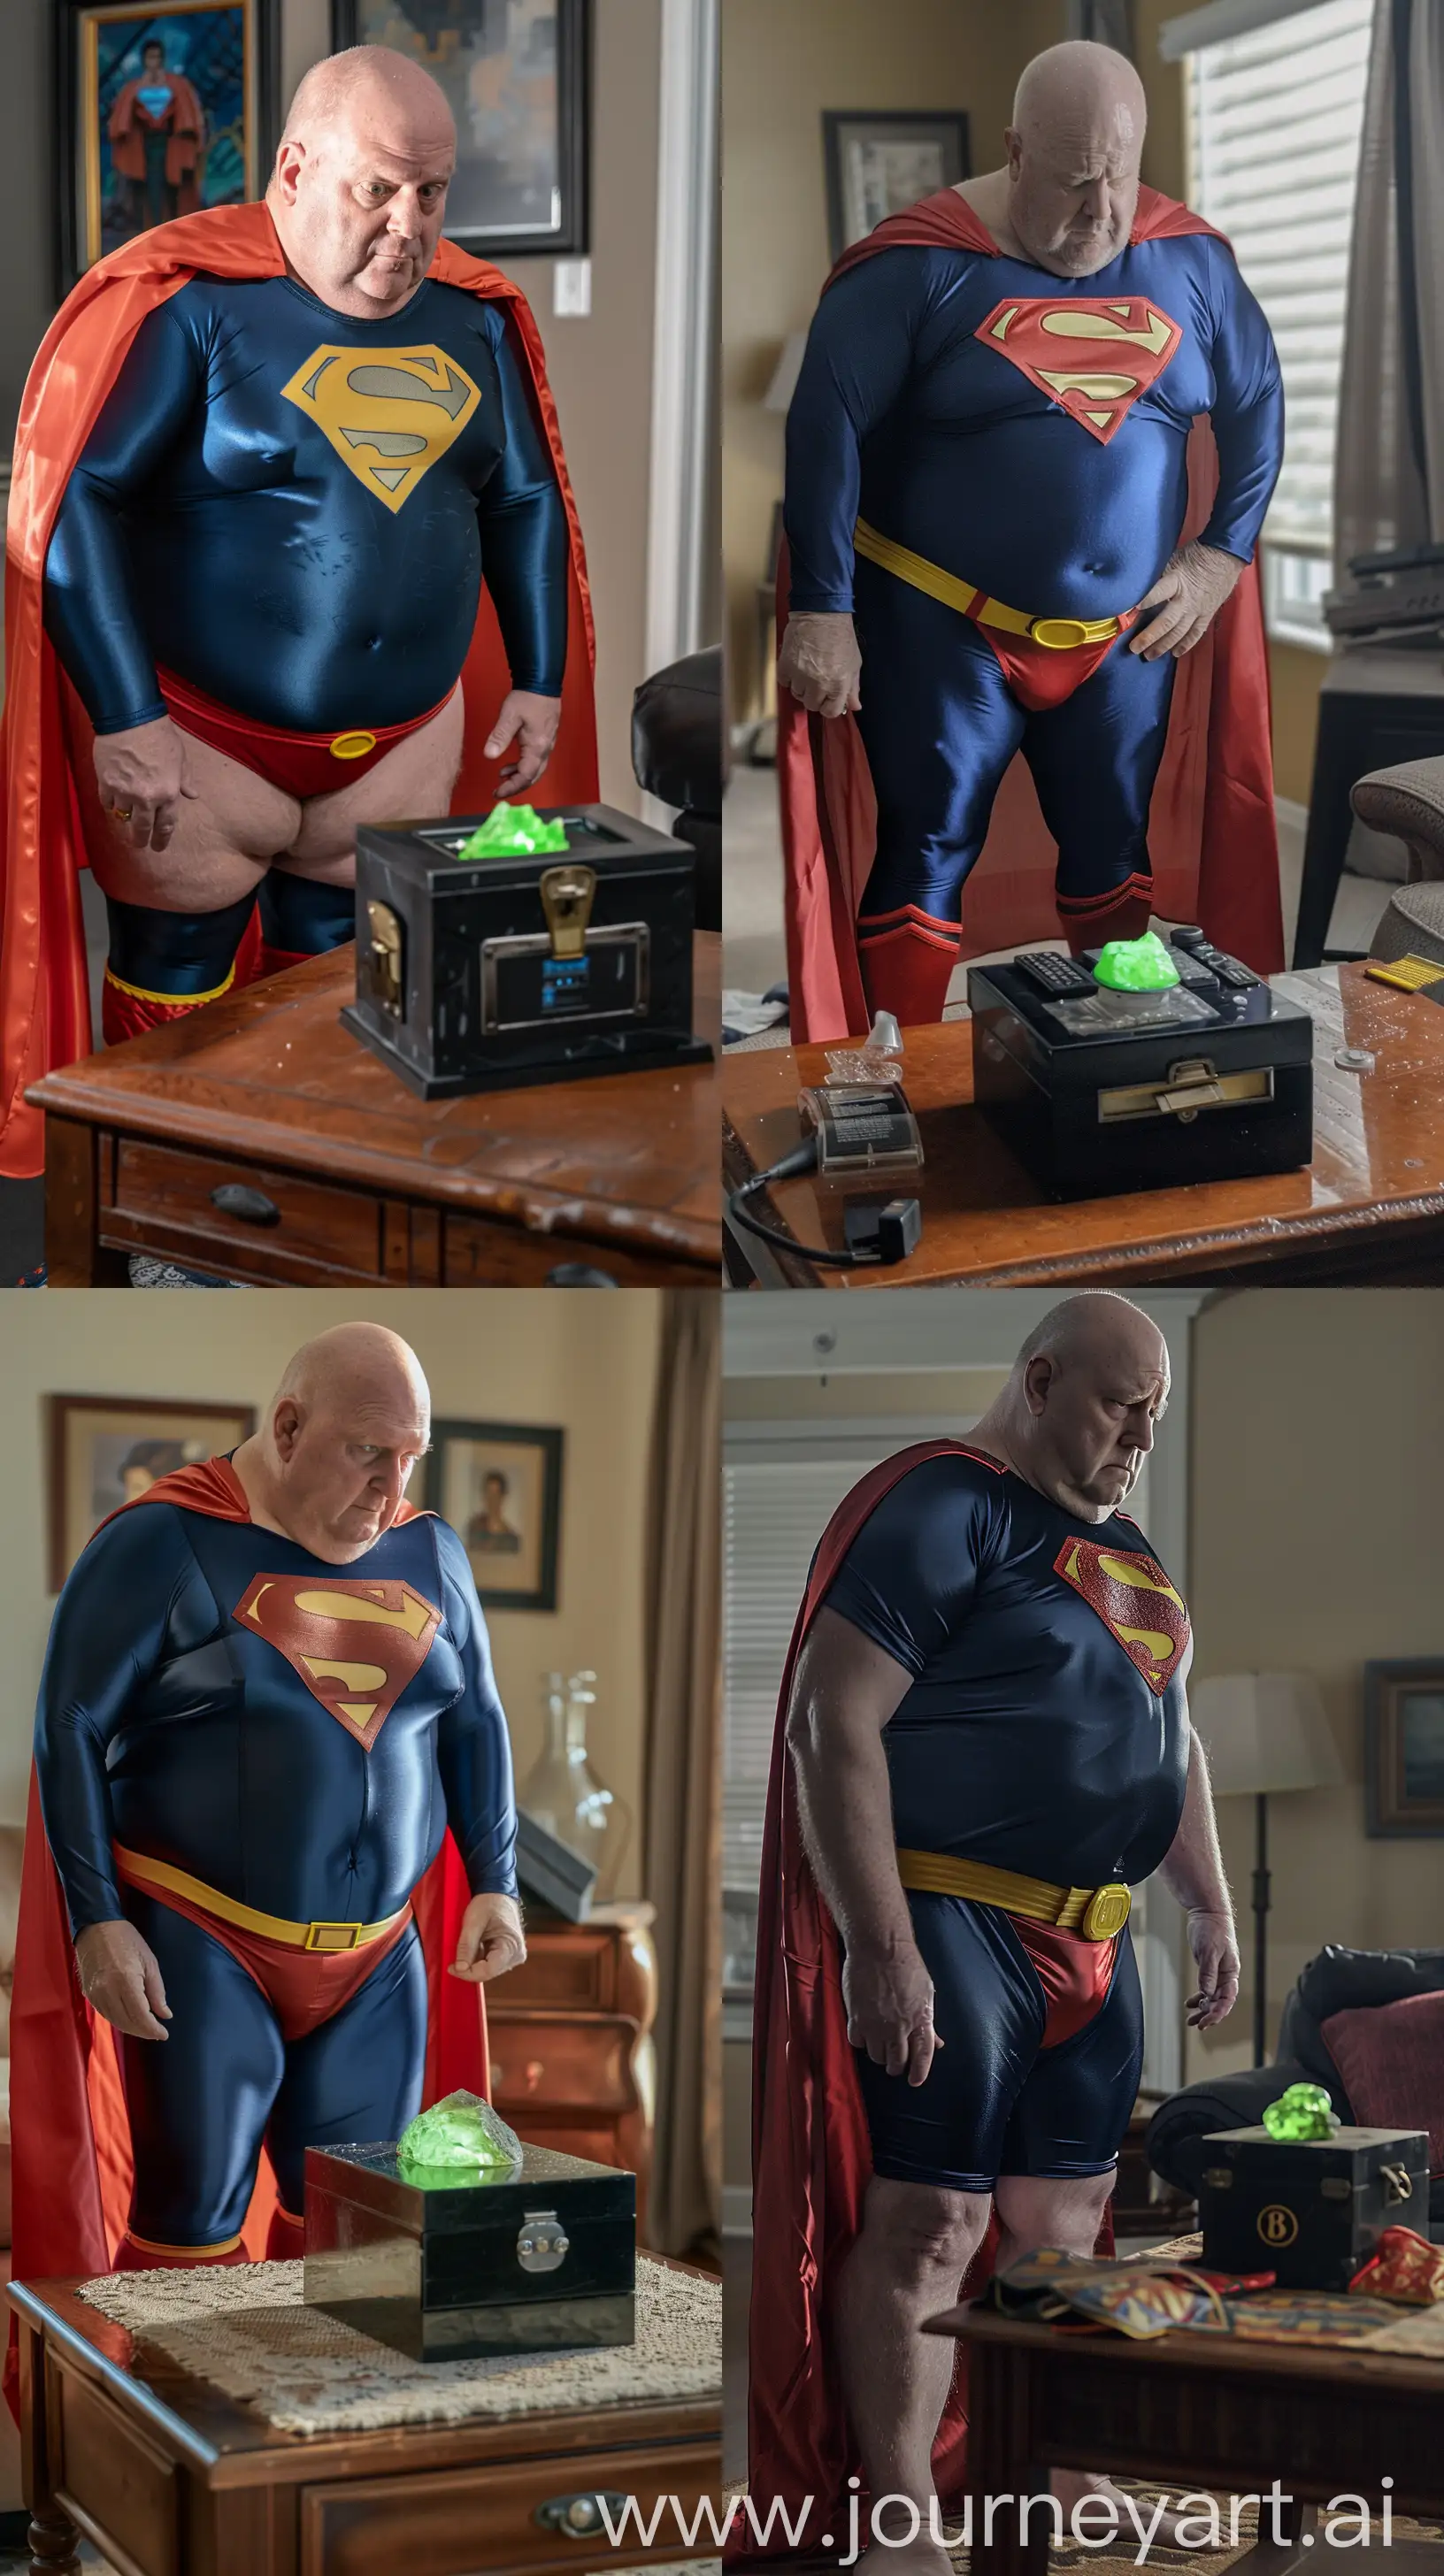 Elderly-Superman-Unveils-Kryptonite-Discovery-in-Living-Room